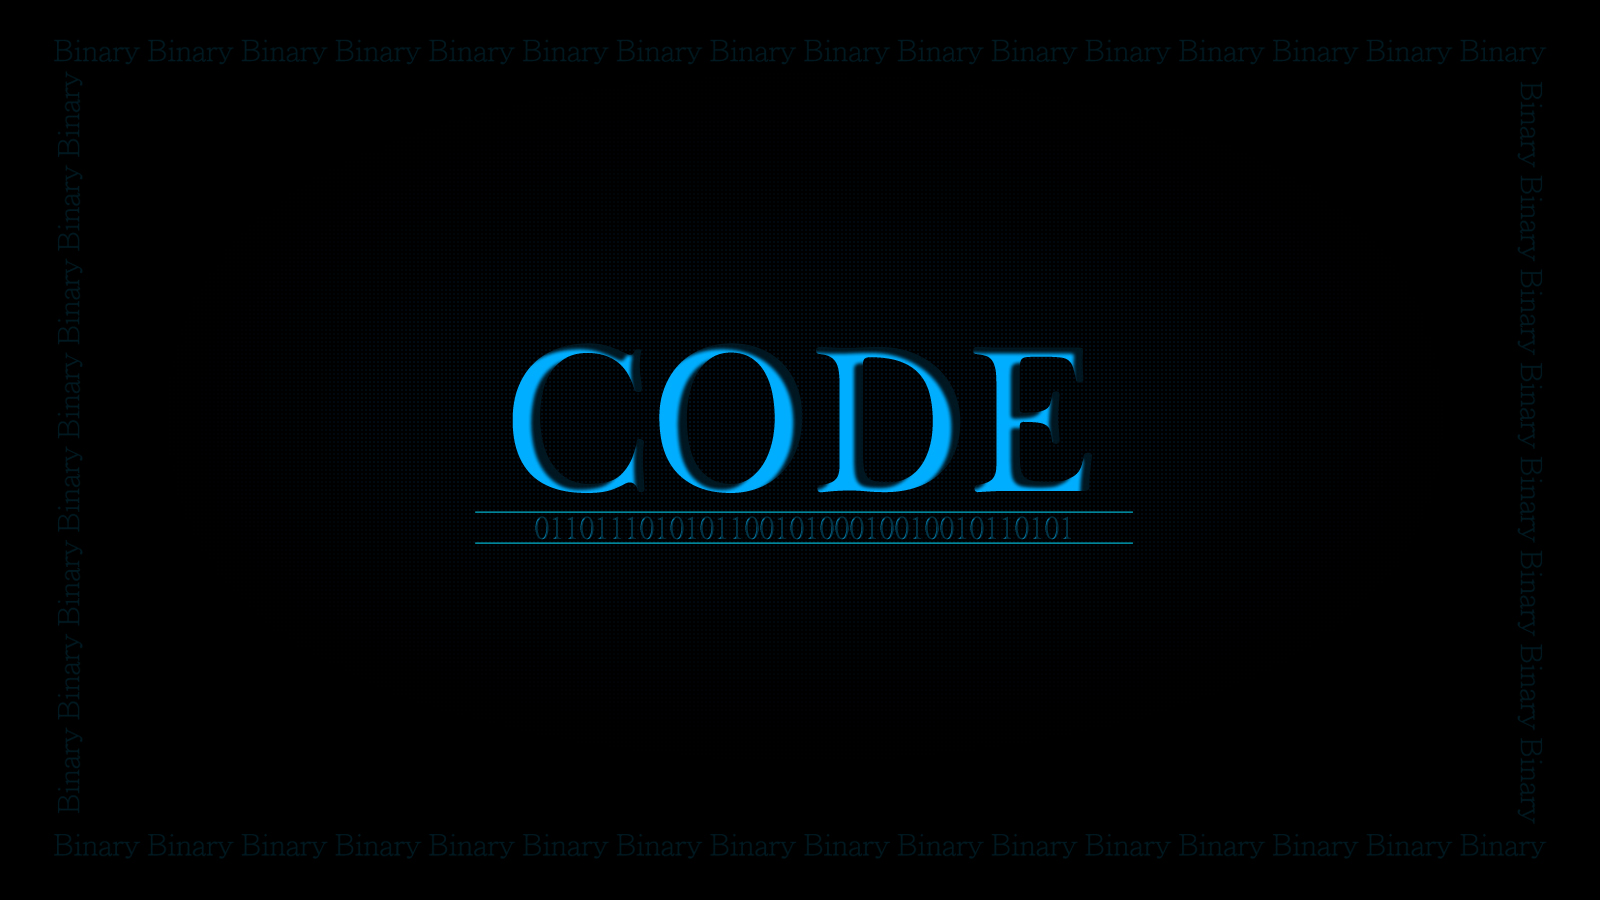 Binary code wallpaper   ForWallpapercom